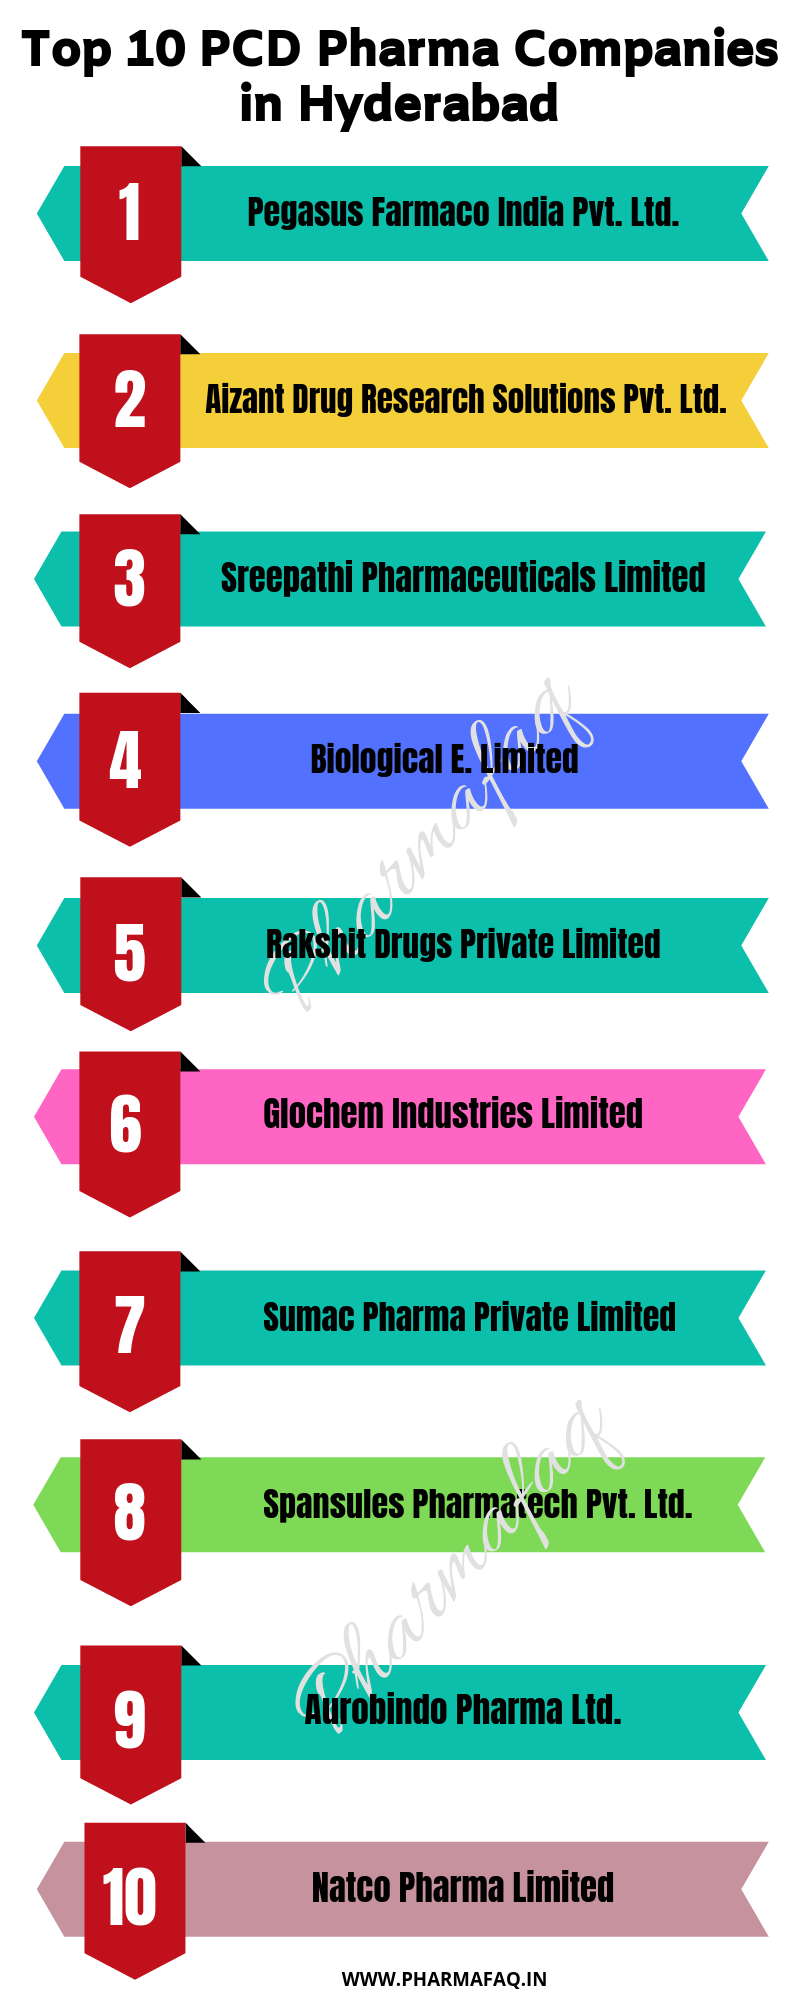 Top 10 PCD Pharma Franchise Companies in Hyd